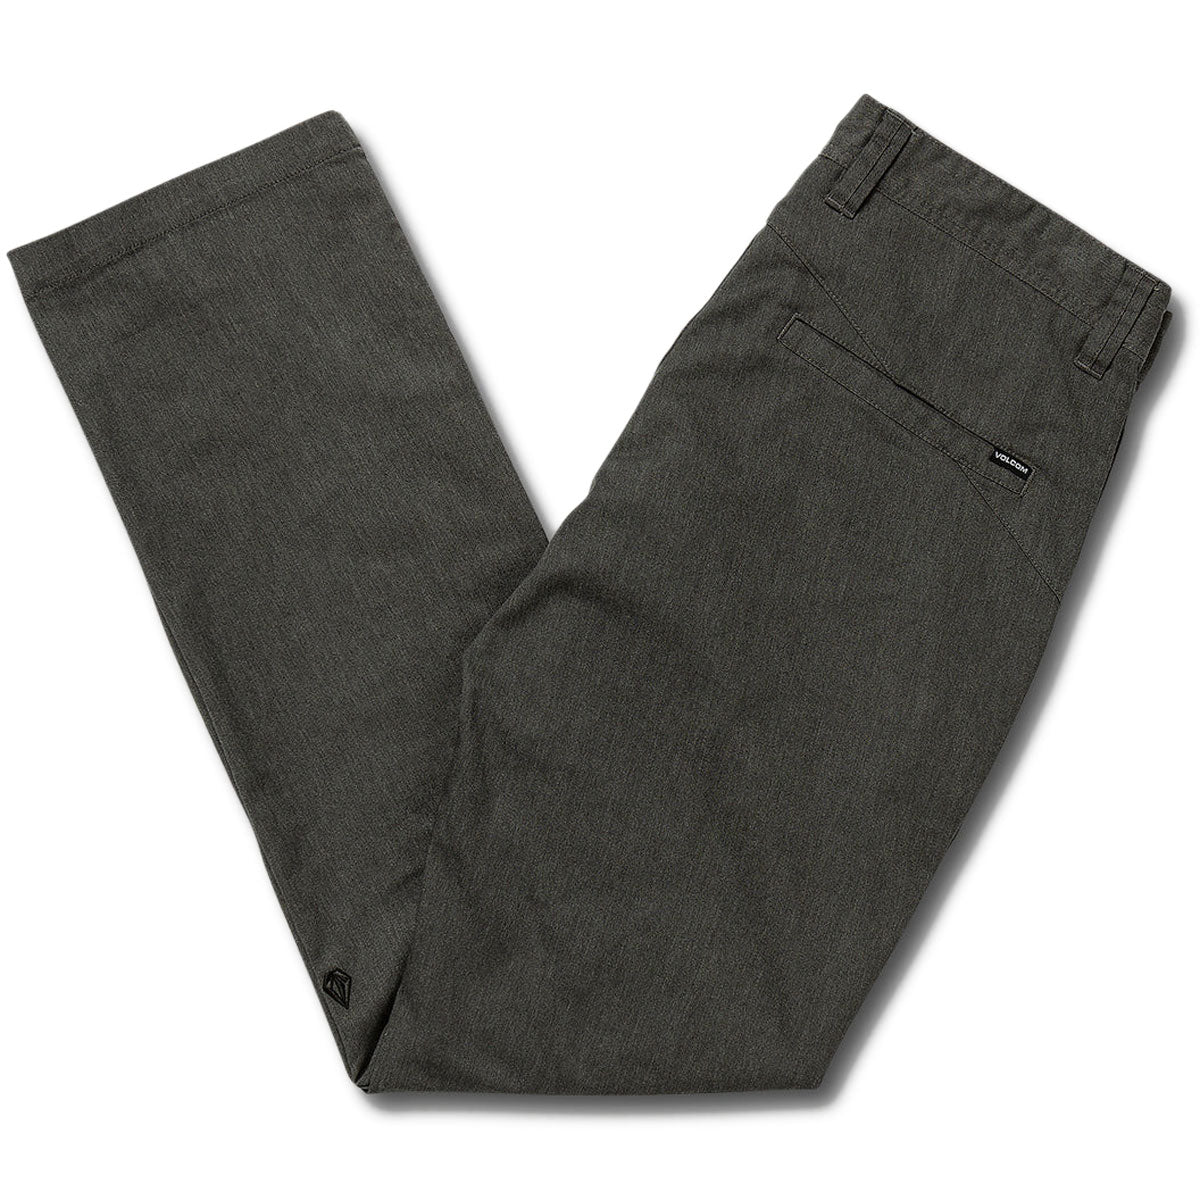 Volcom Frickn Modern Stretch Pants - Charcoal Heather image 2